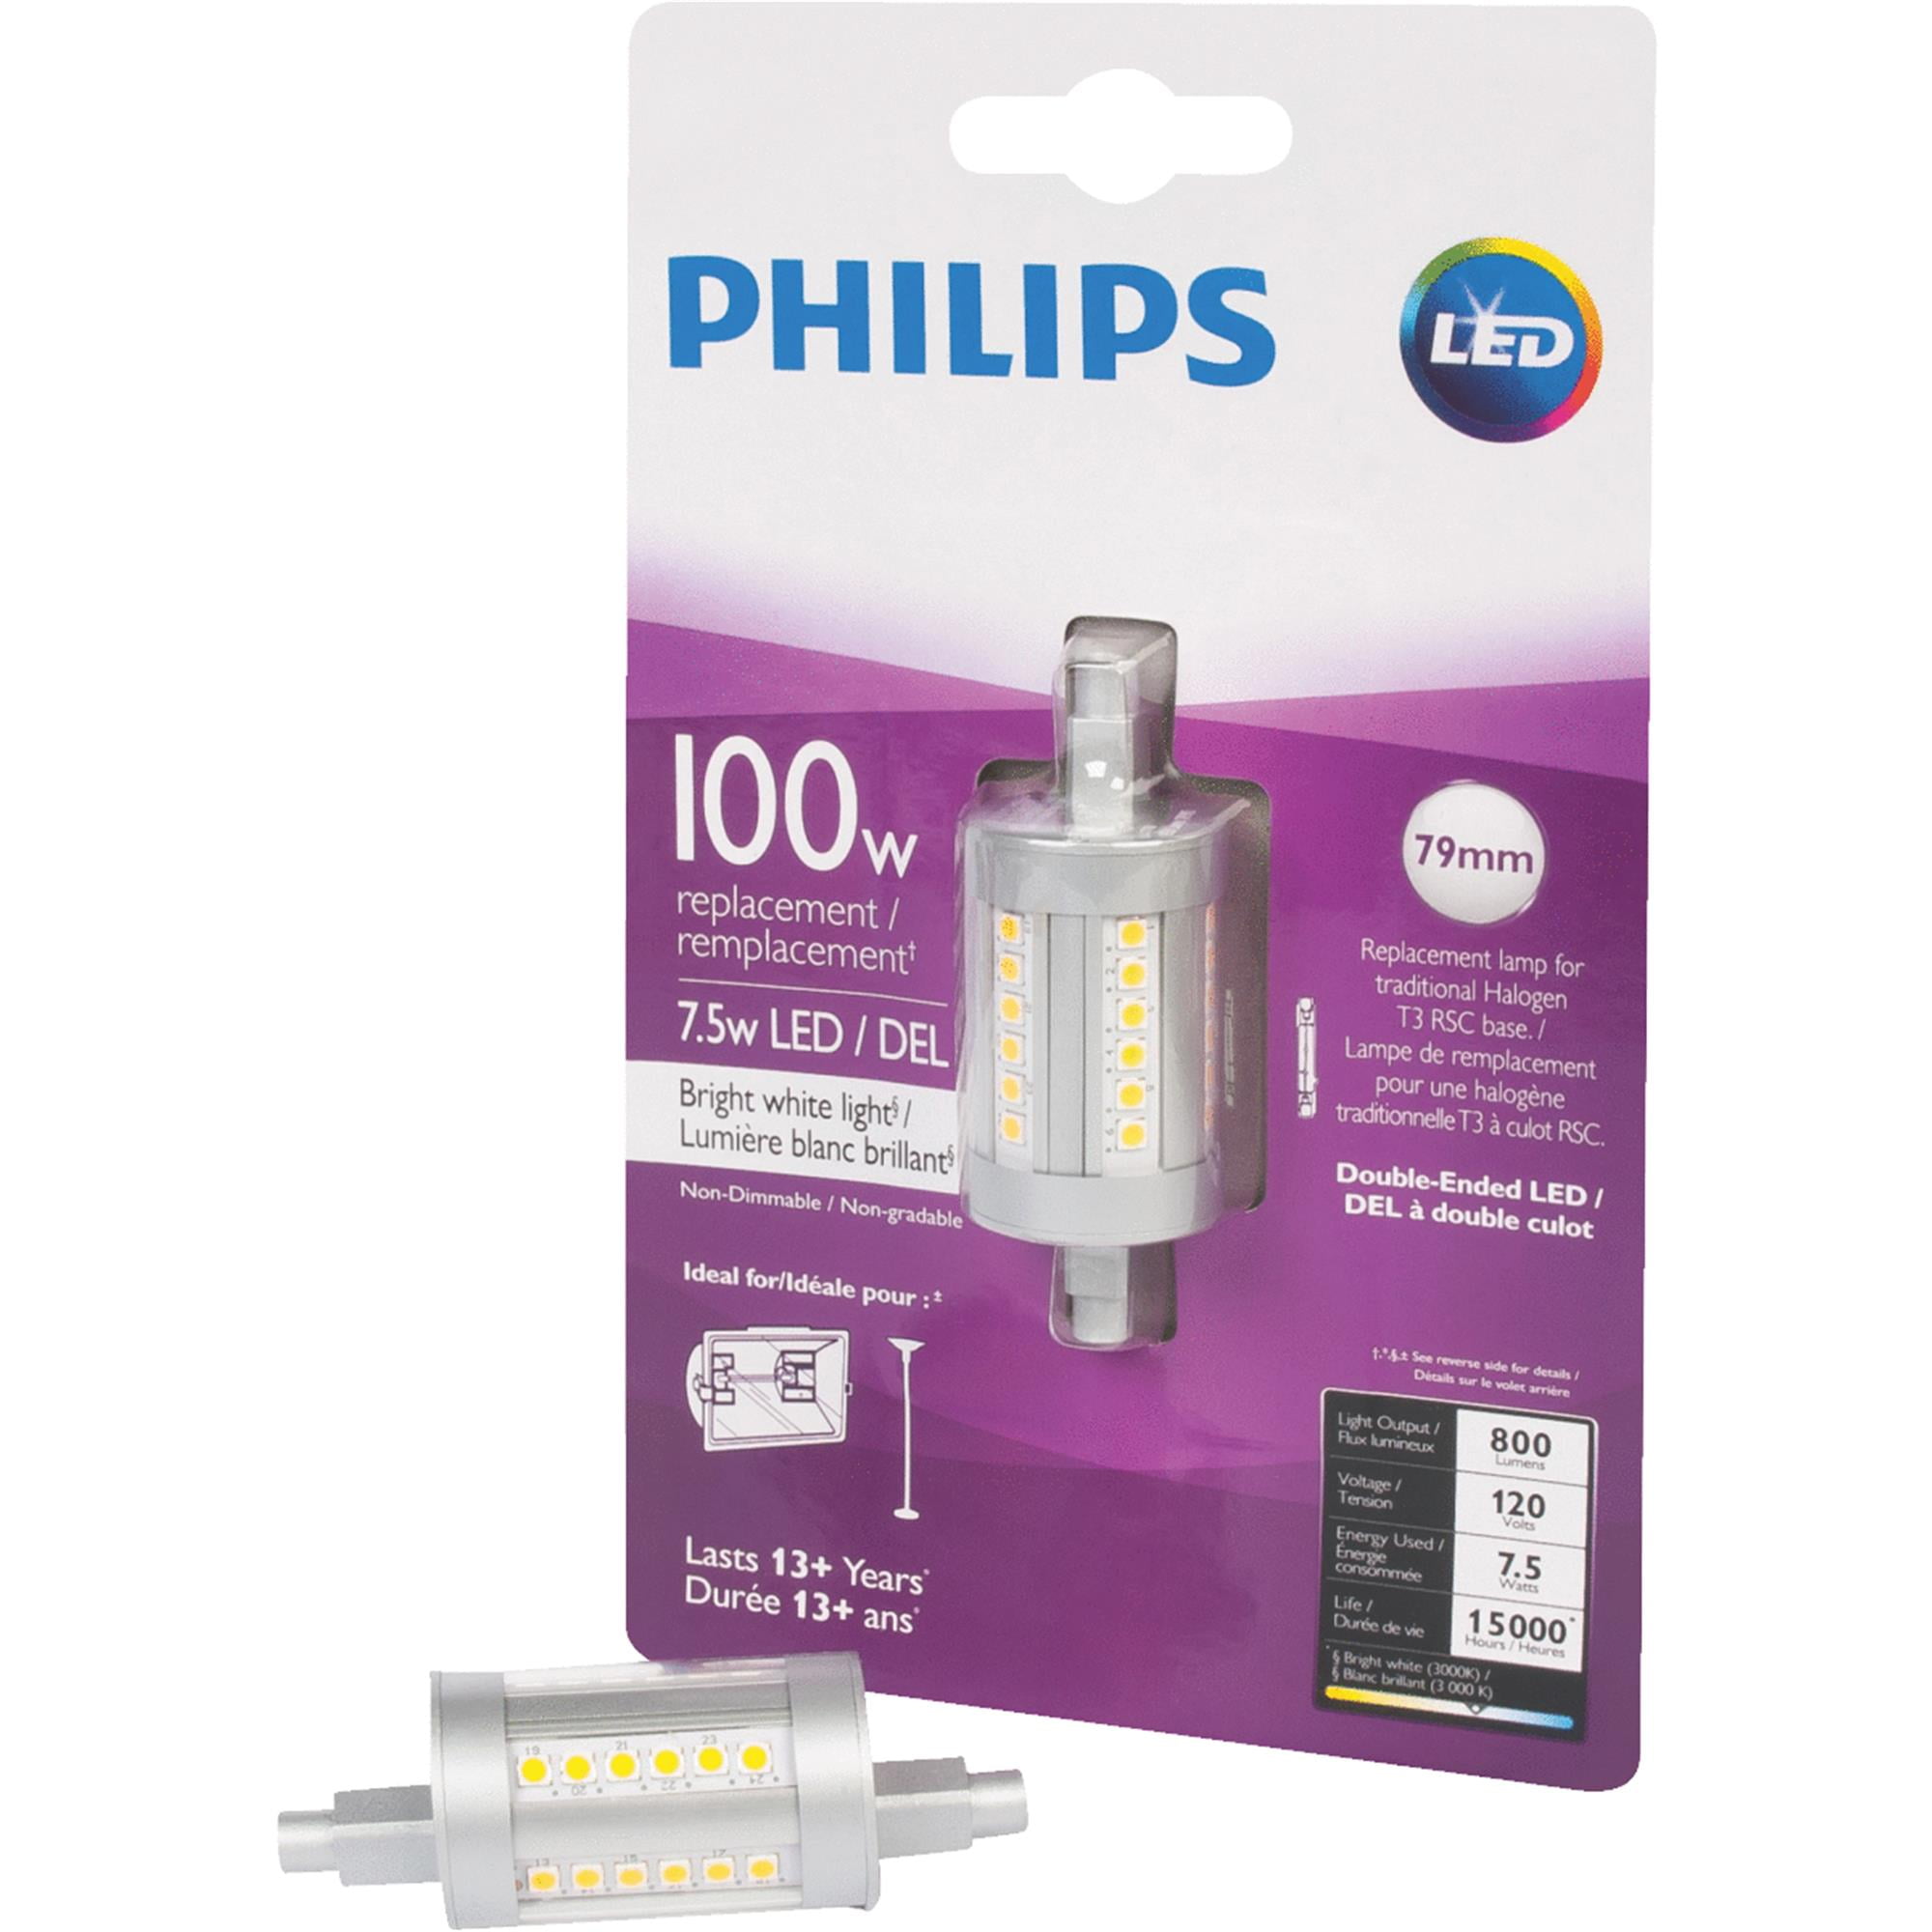 Led philips 12v. Philips 100w s r. Wt120c led Philips. Филипс 100/90 w характеристики.